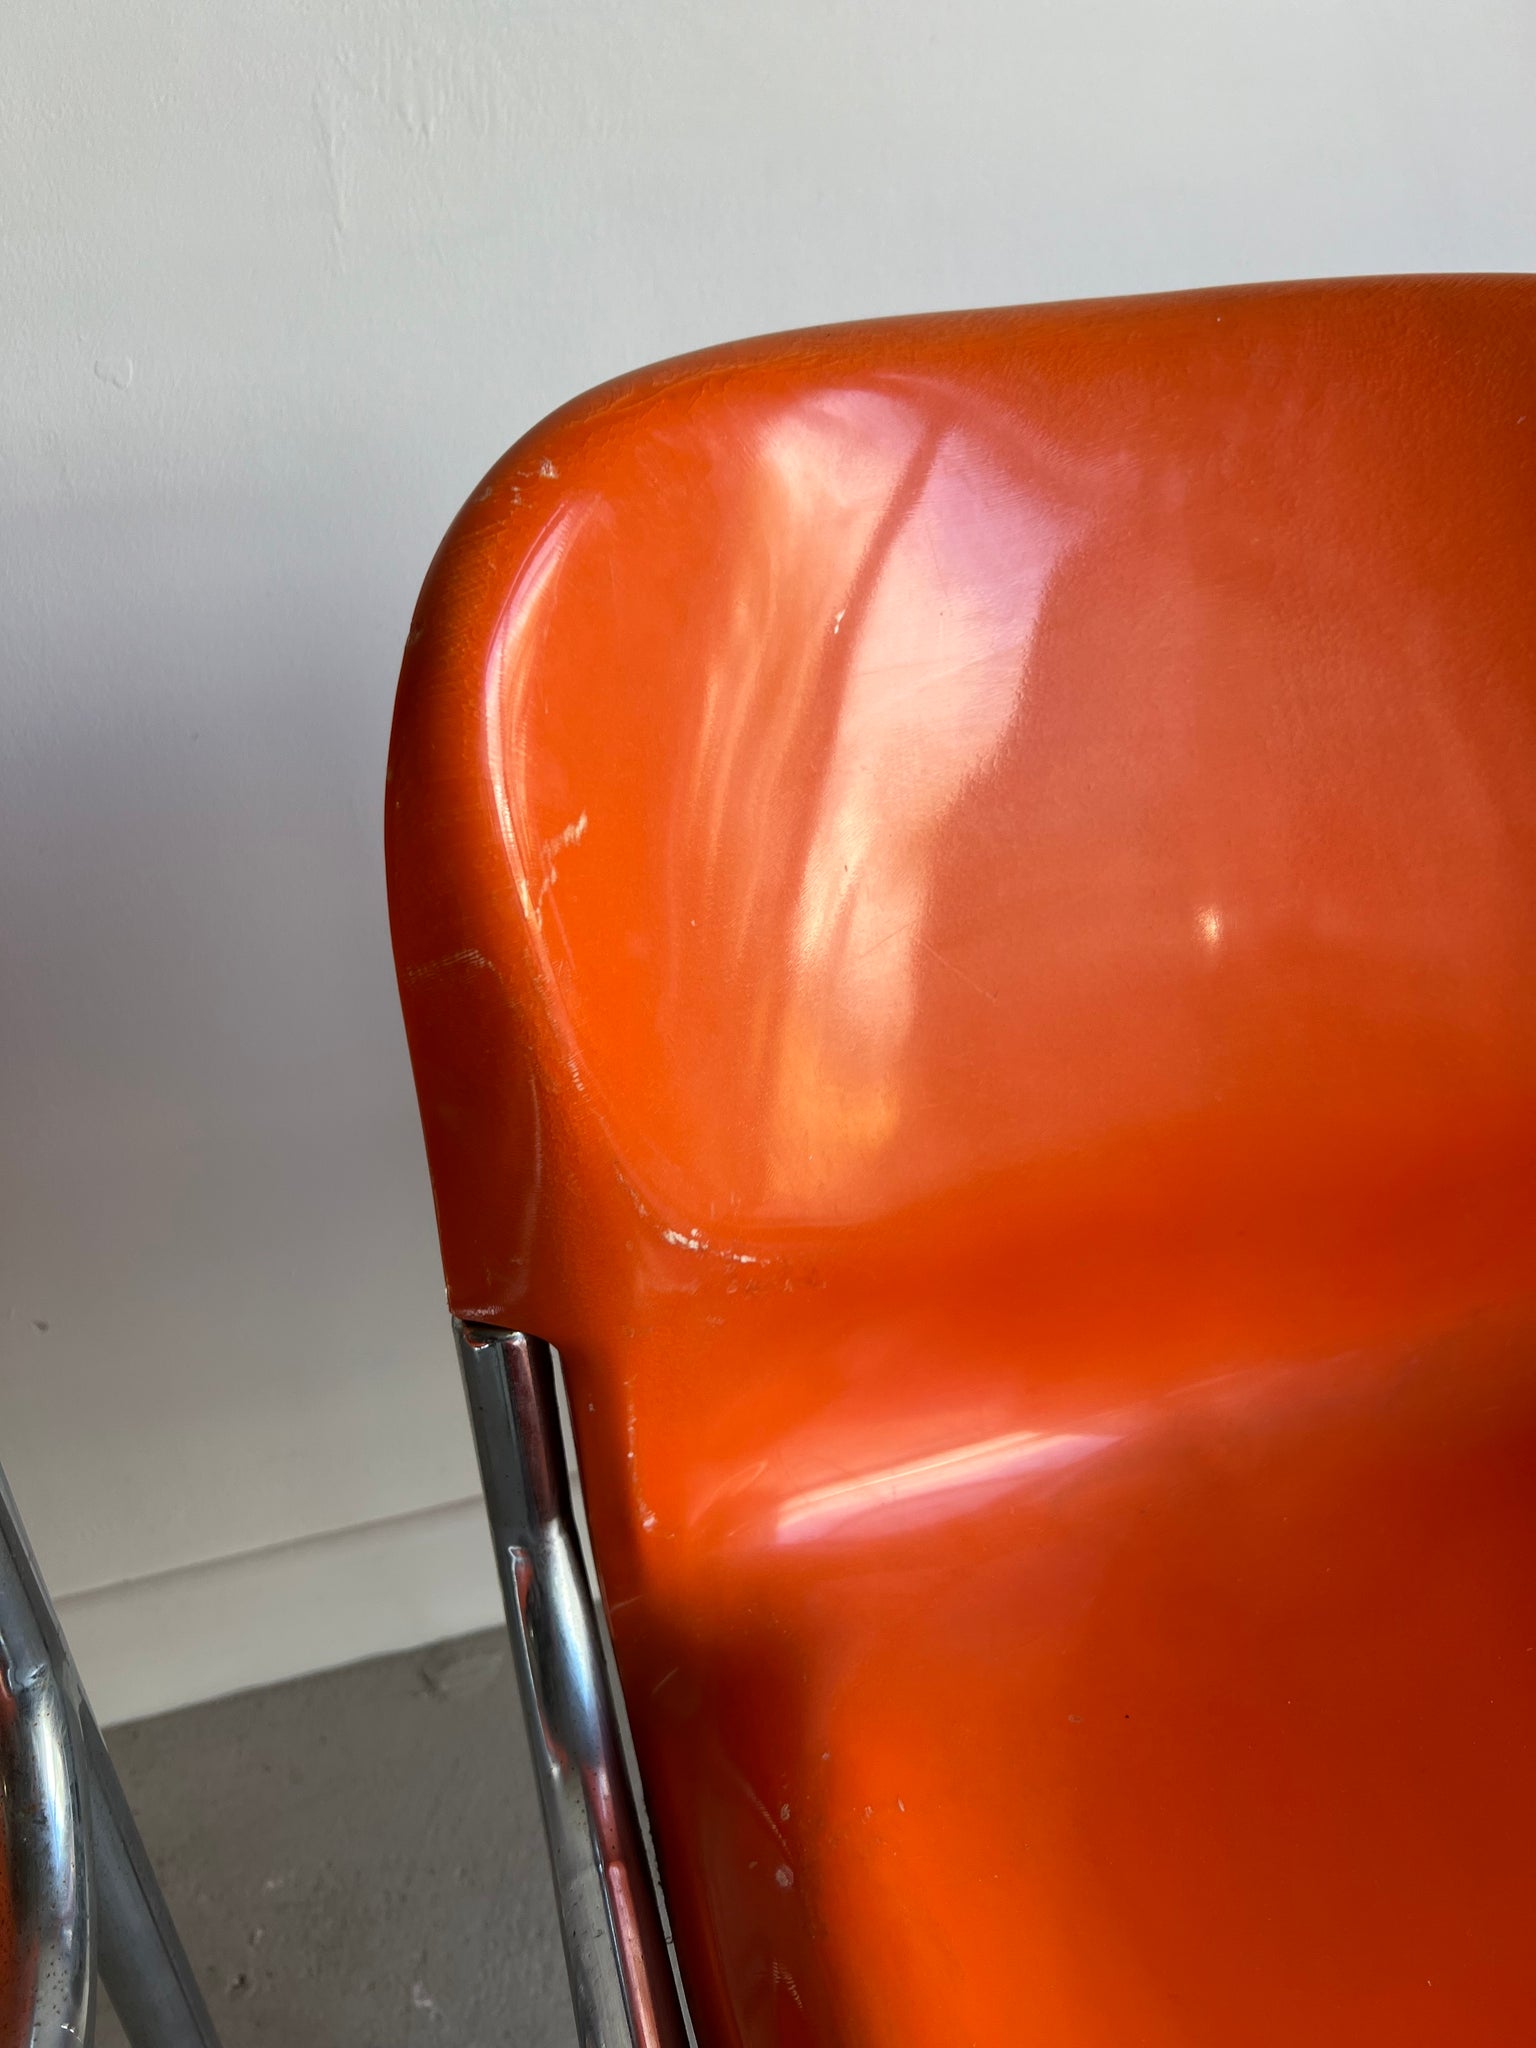 Set of x4 Orange Plastic Chairs